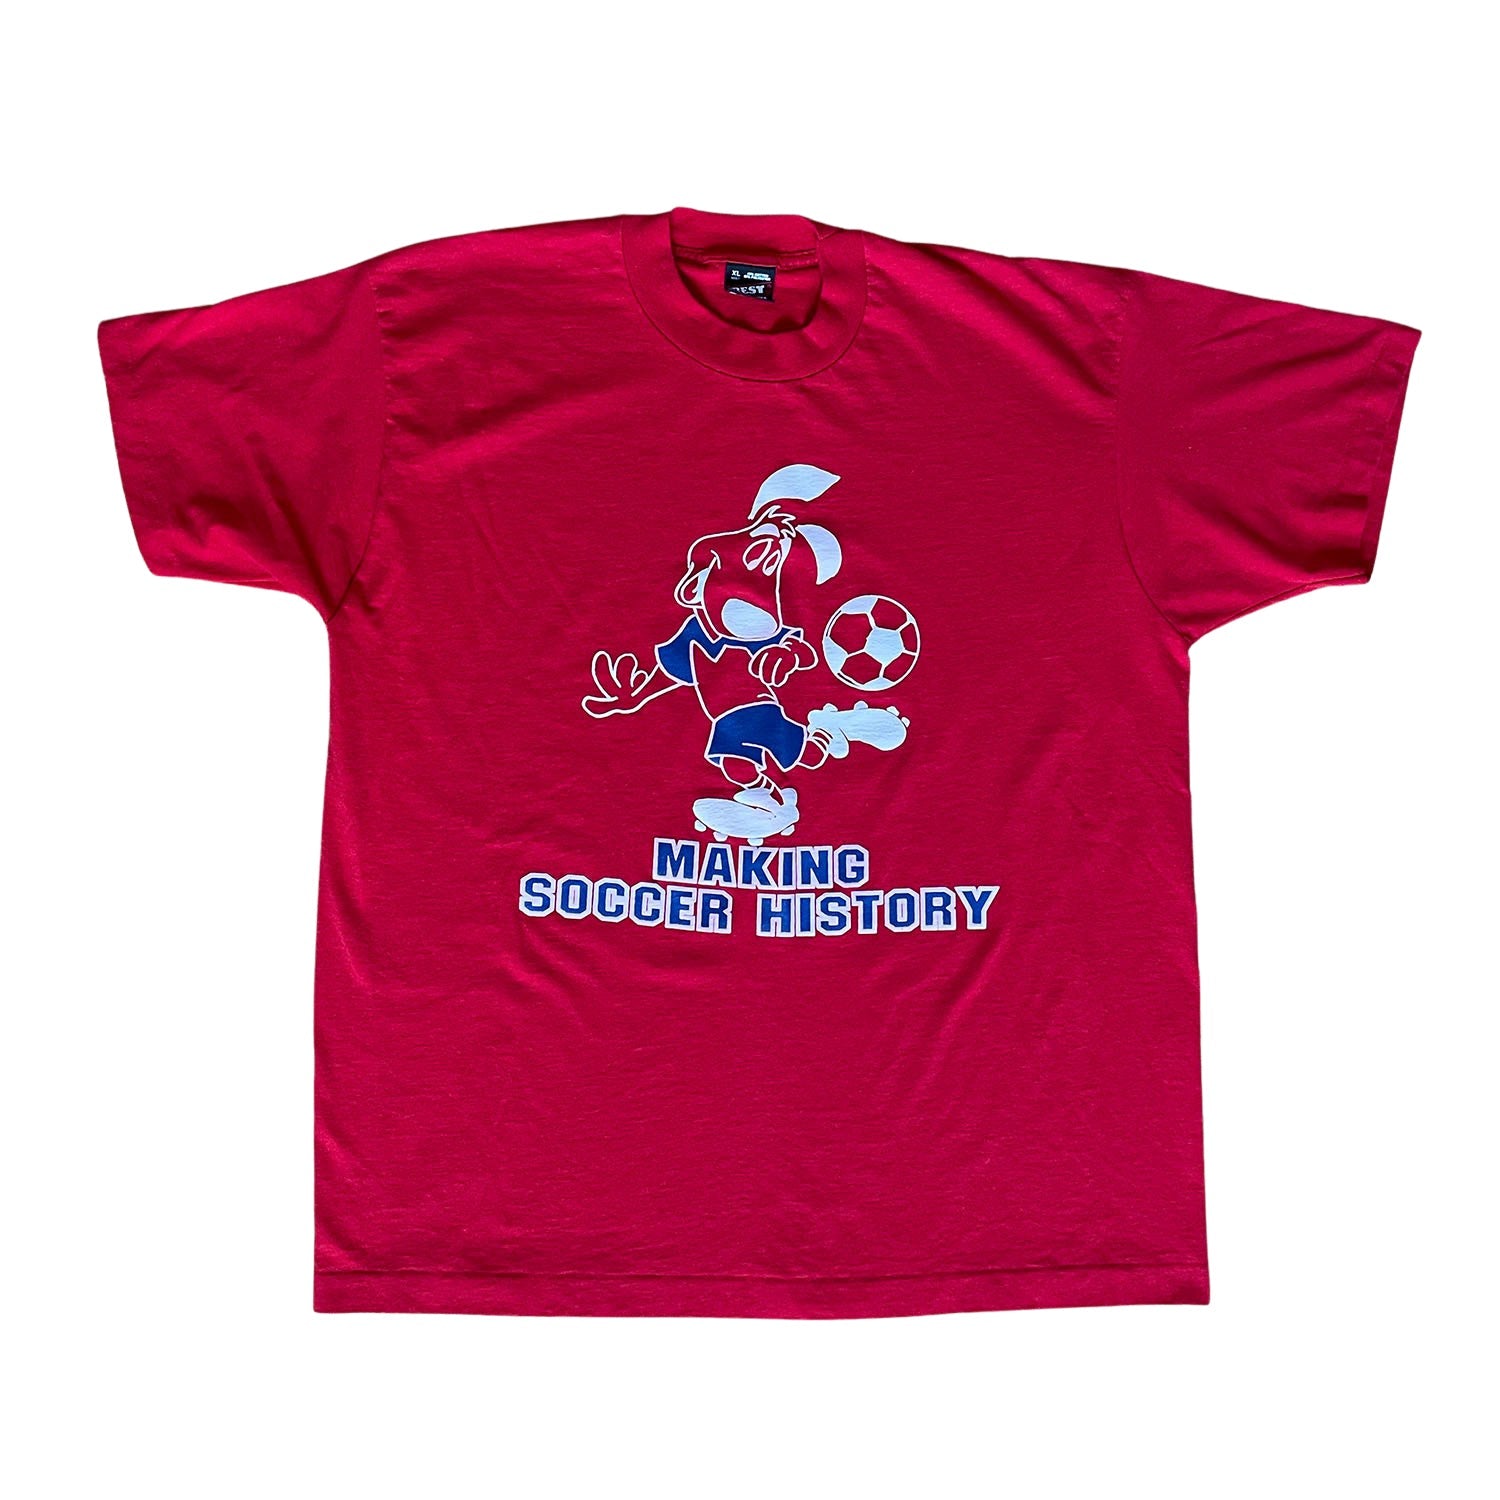 1994 "Making Soccer History" T-Shirt - L